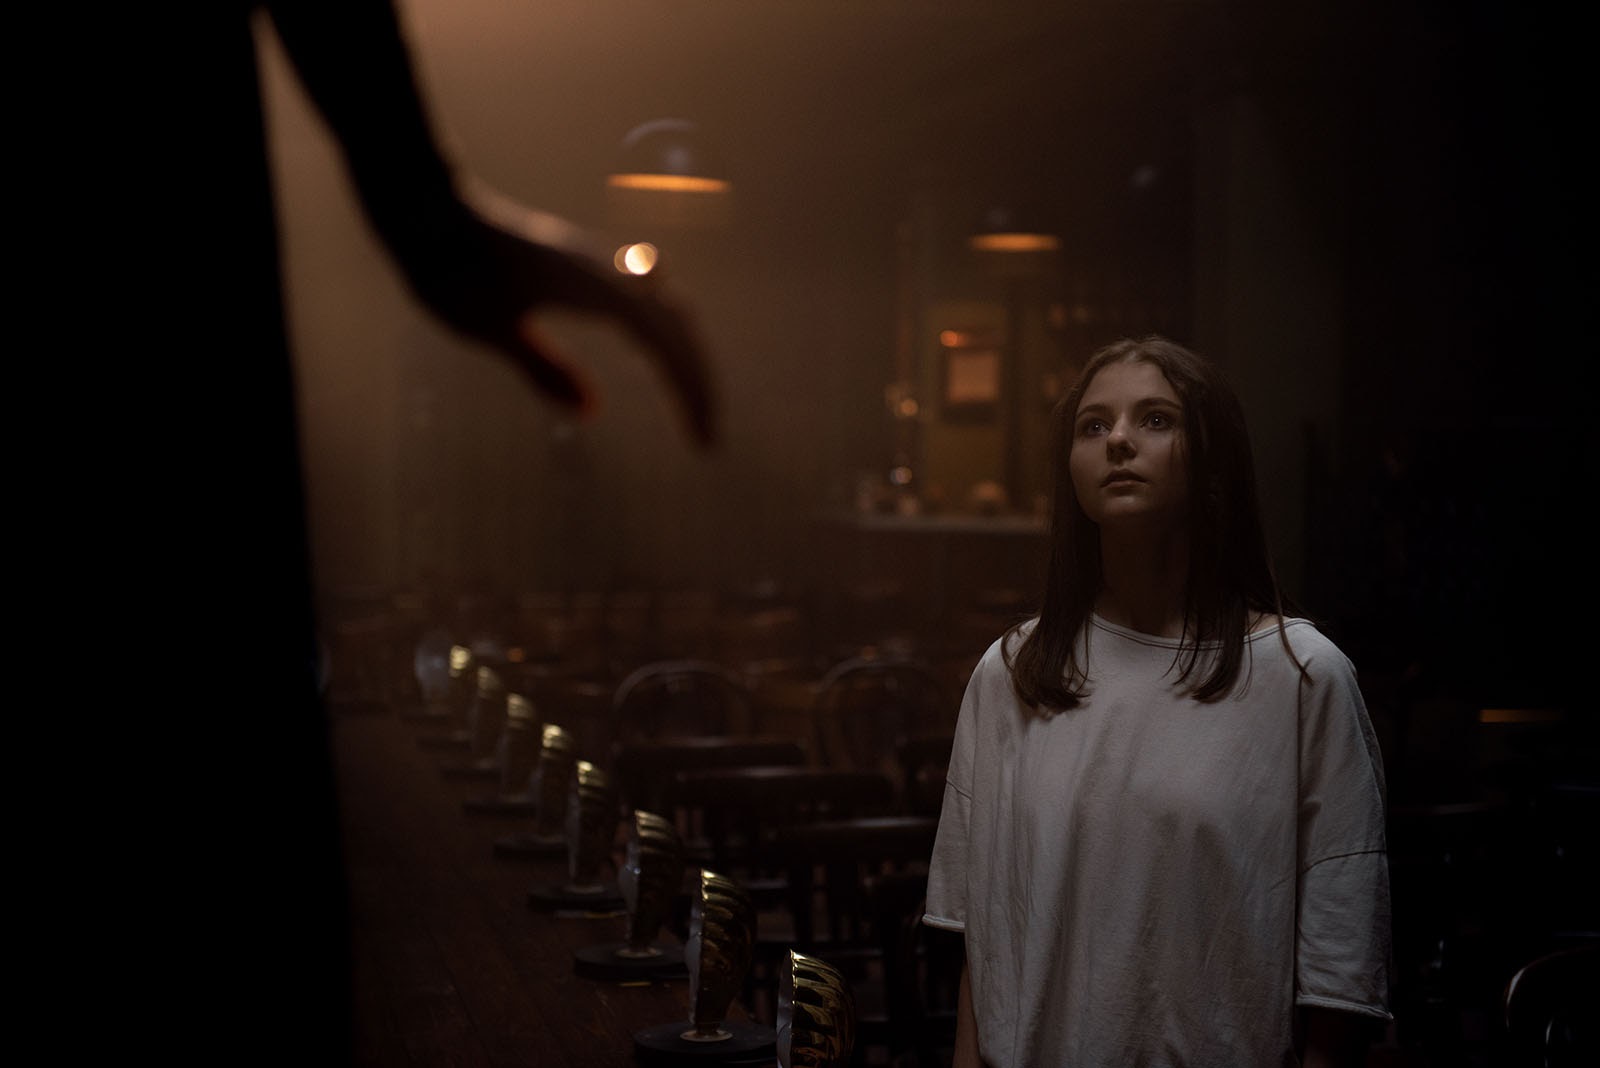 Thomasin McKenzie plays Eloise (Ellie) in Last Night in Soho, a dark thriller. Image © Focus Features